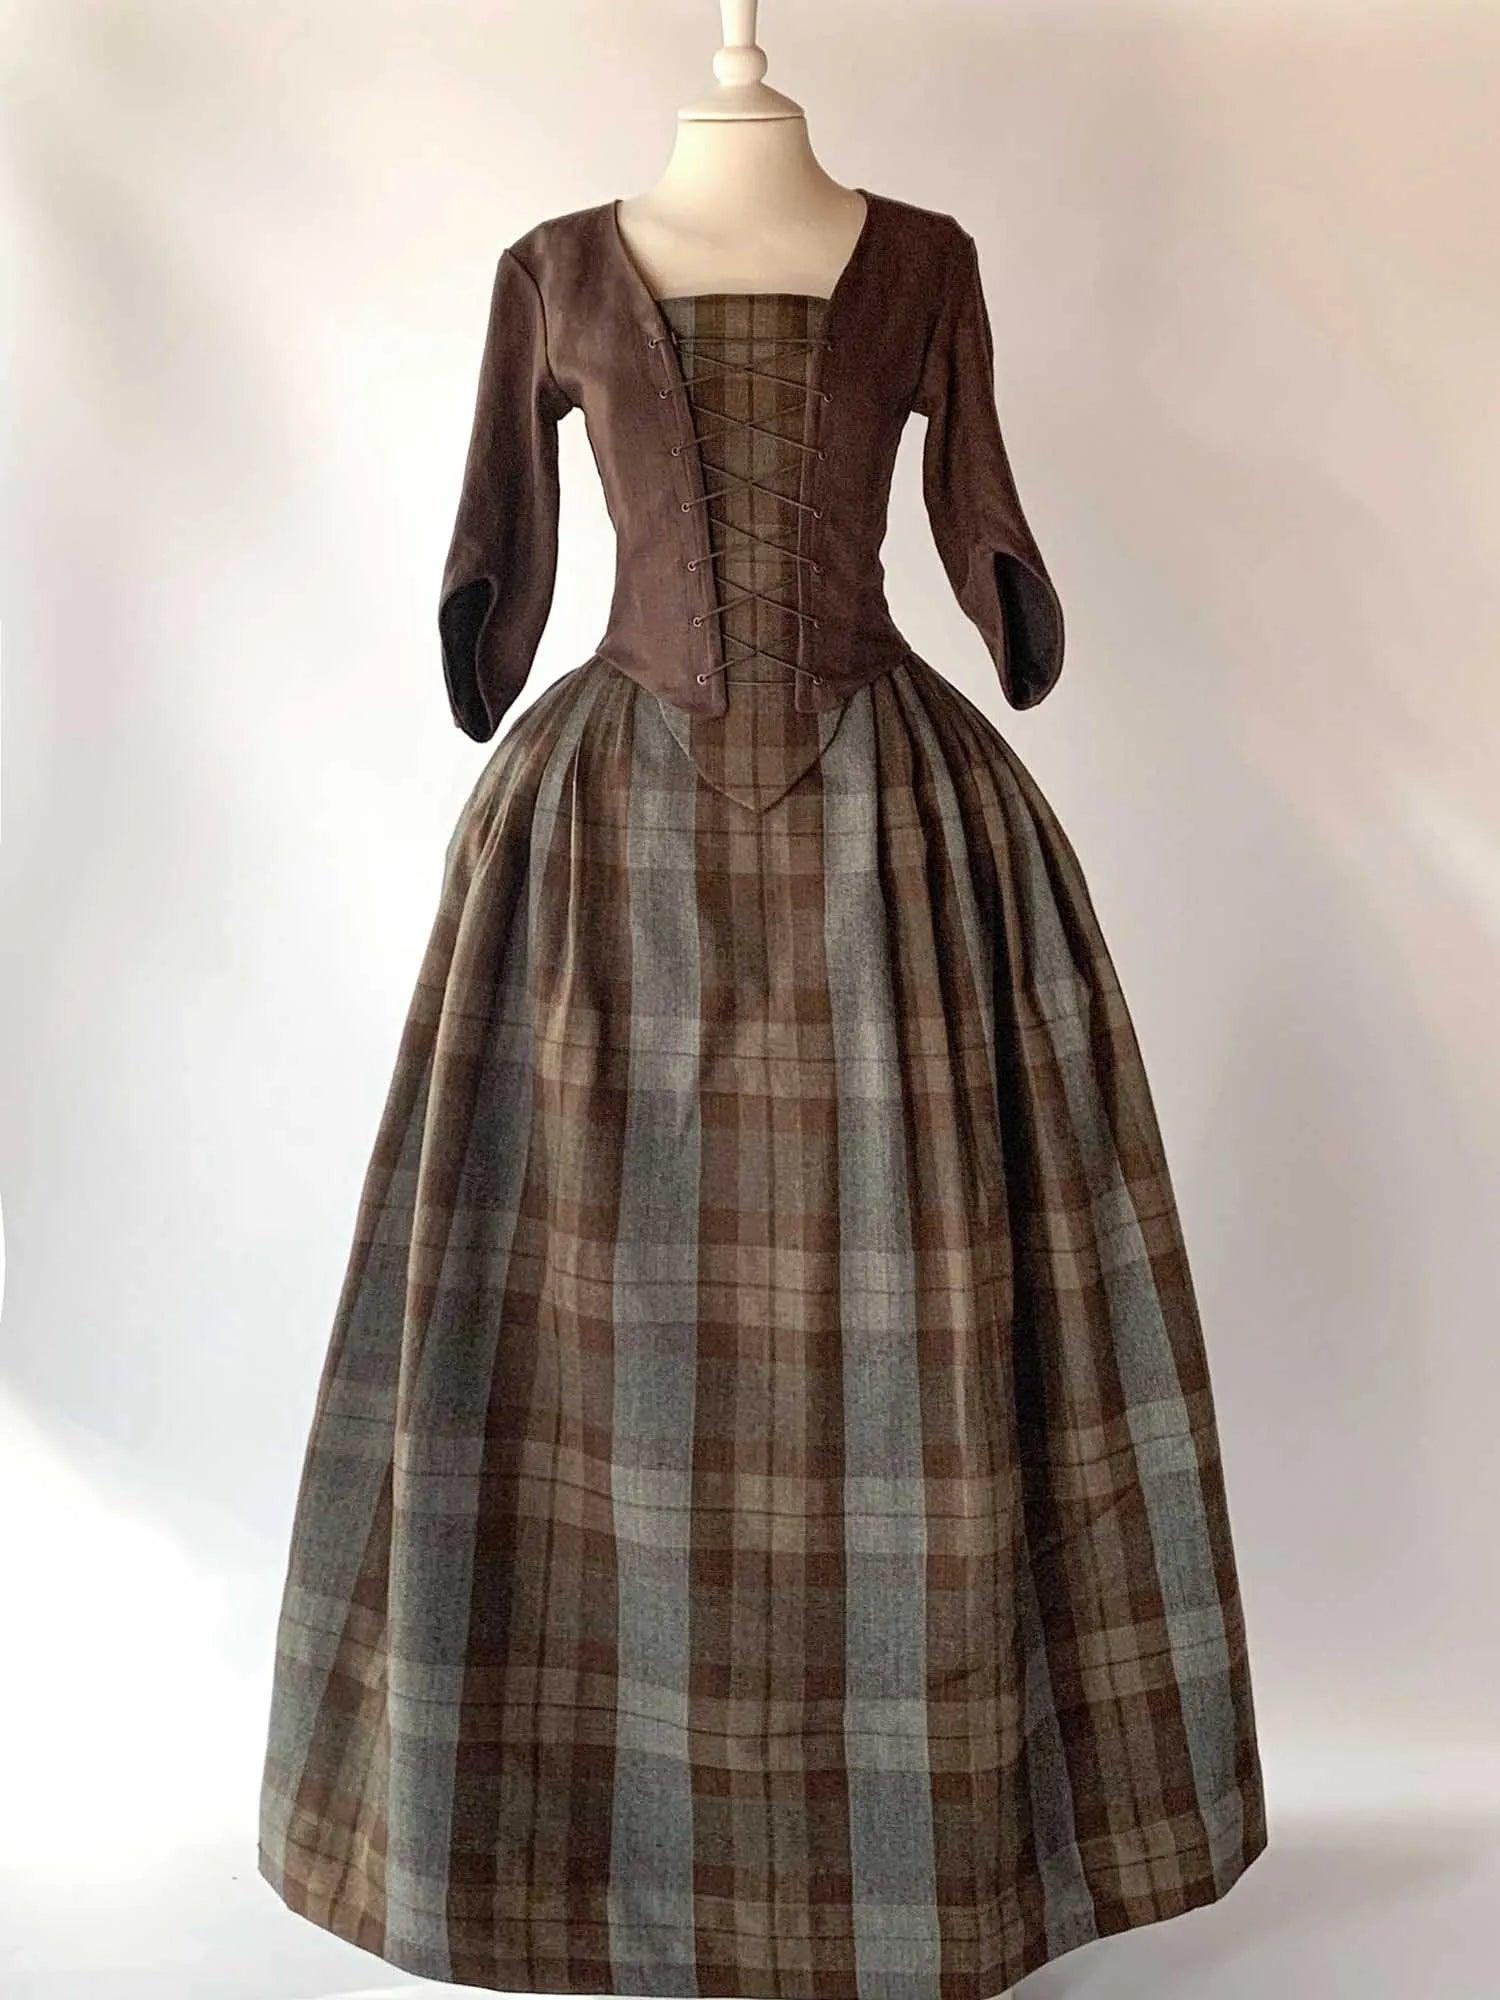 Outlander Costume in Chocolate Linen & Outlander Tartan Skirt - Atelier Serraspina